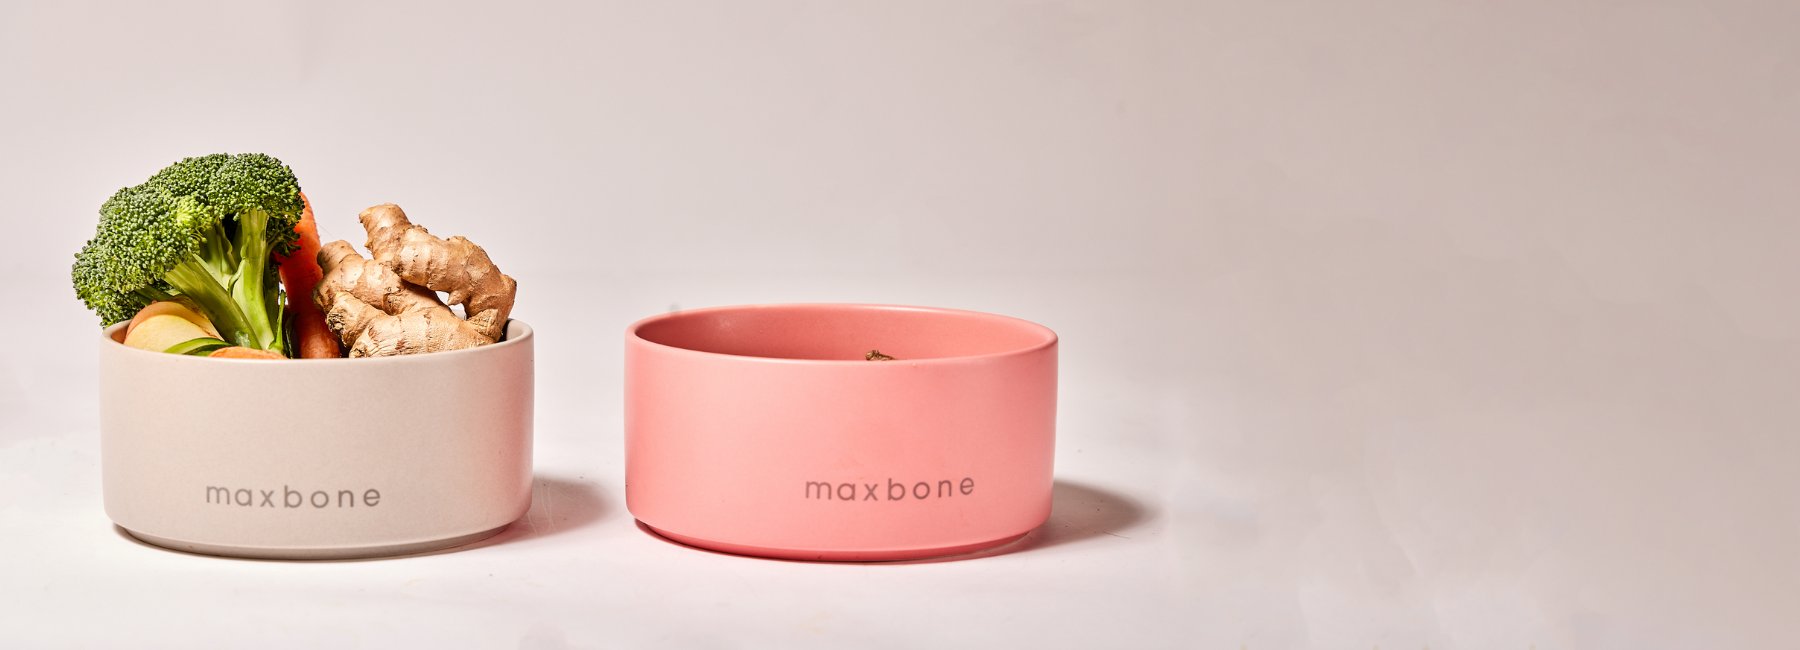 Eat | maxbone